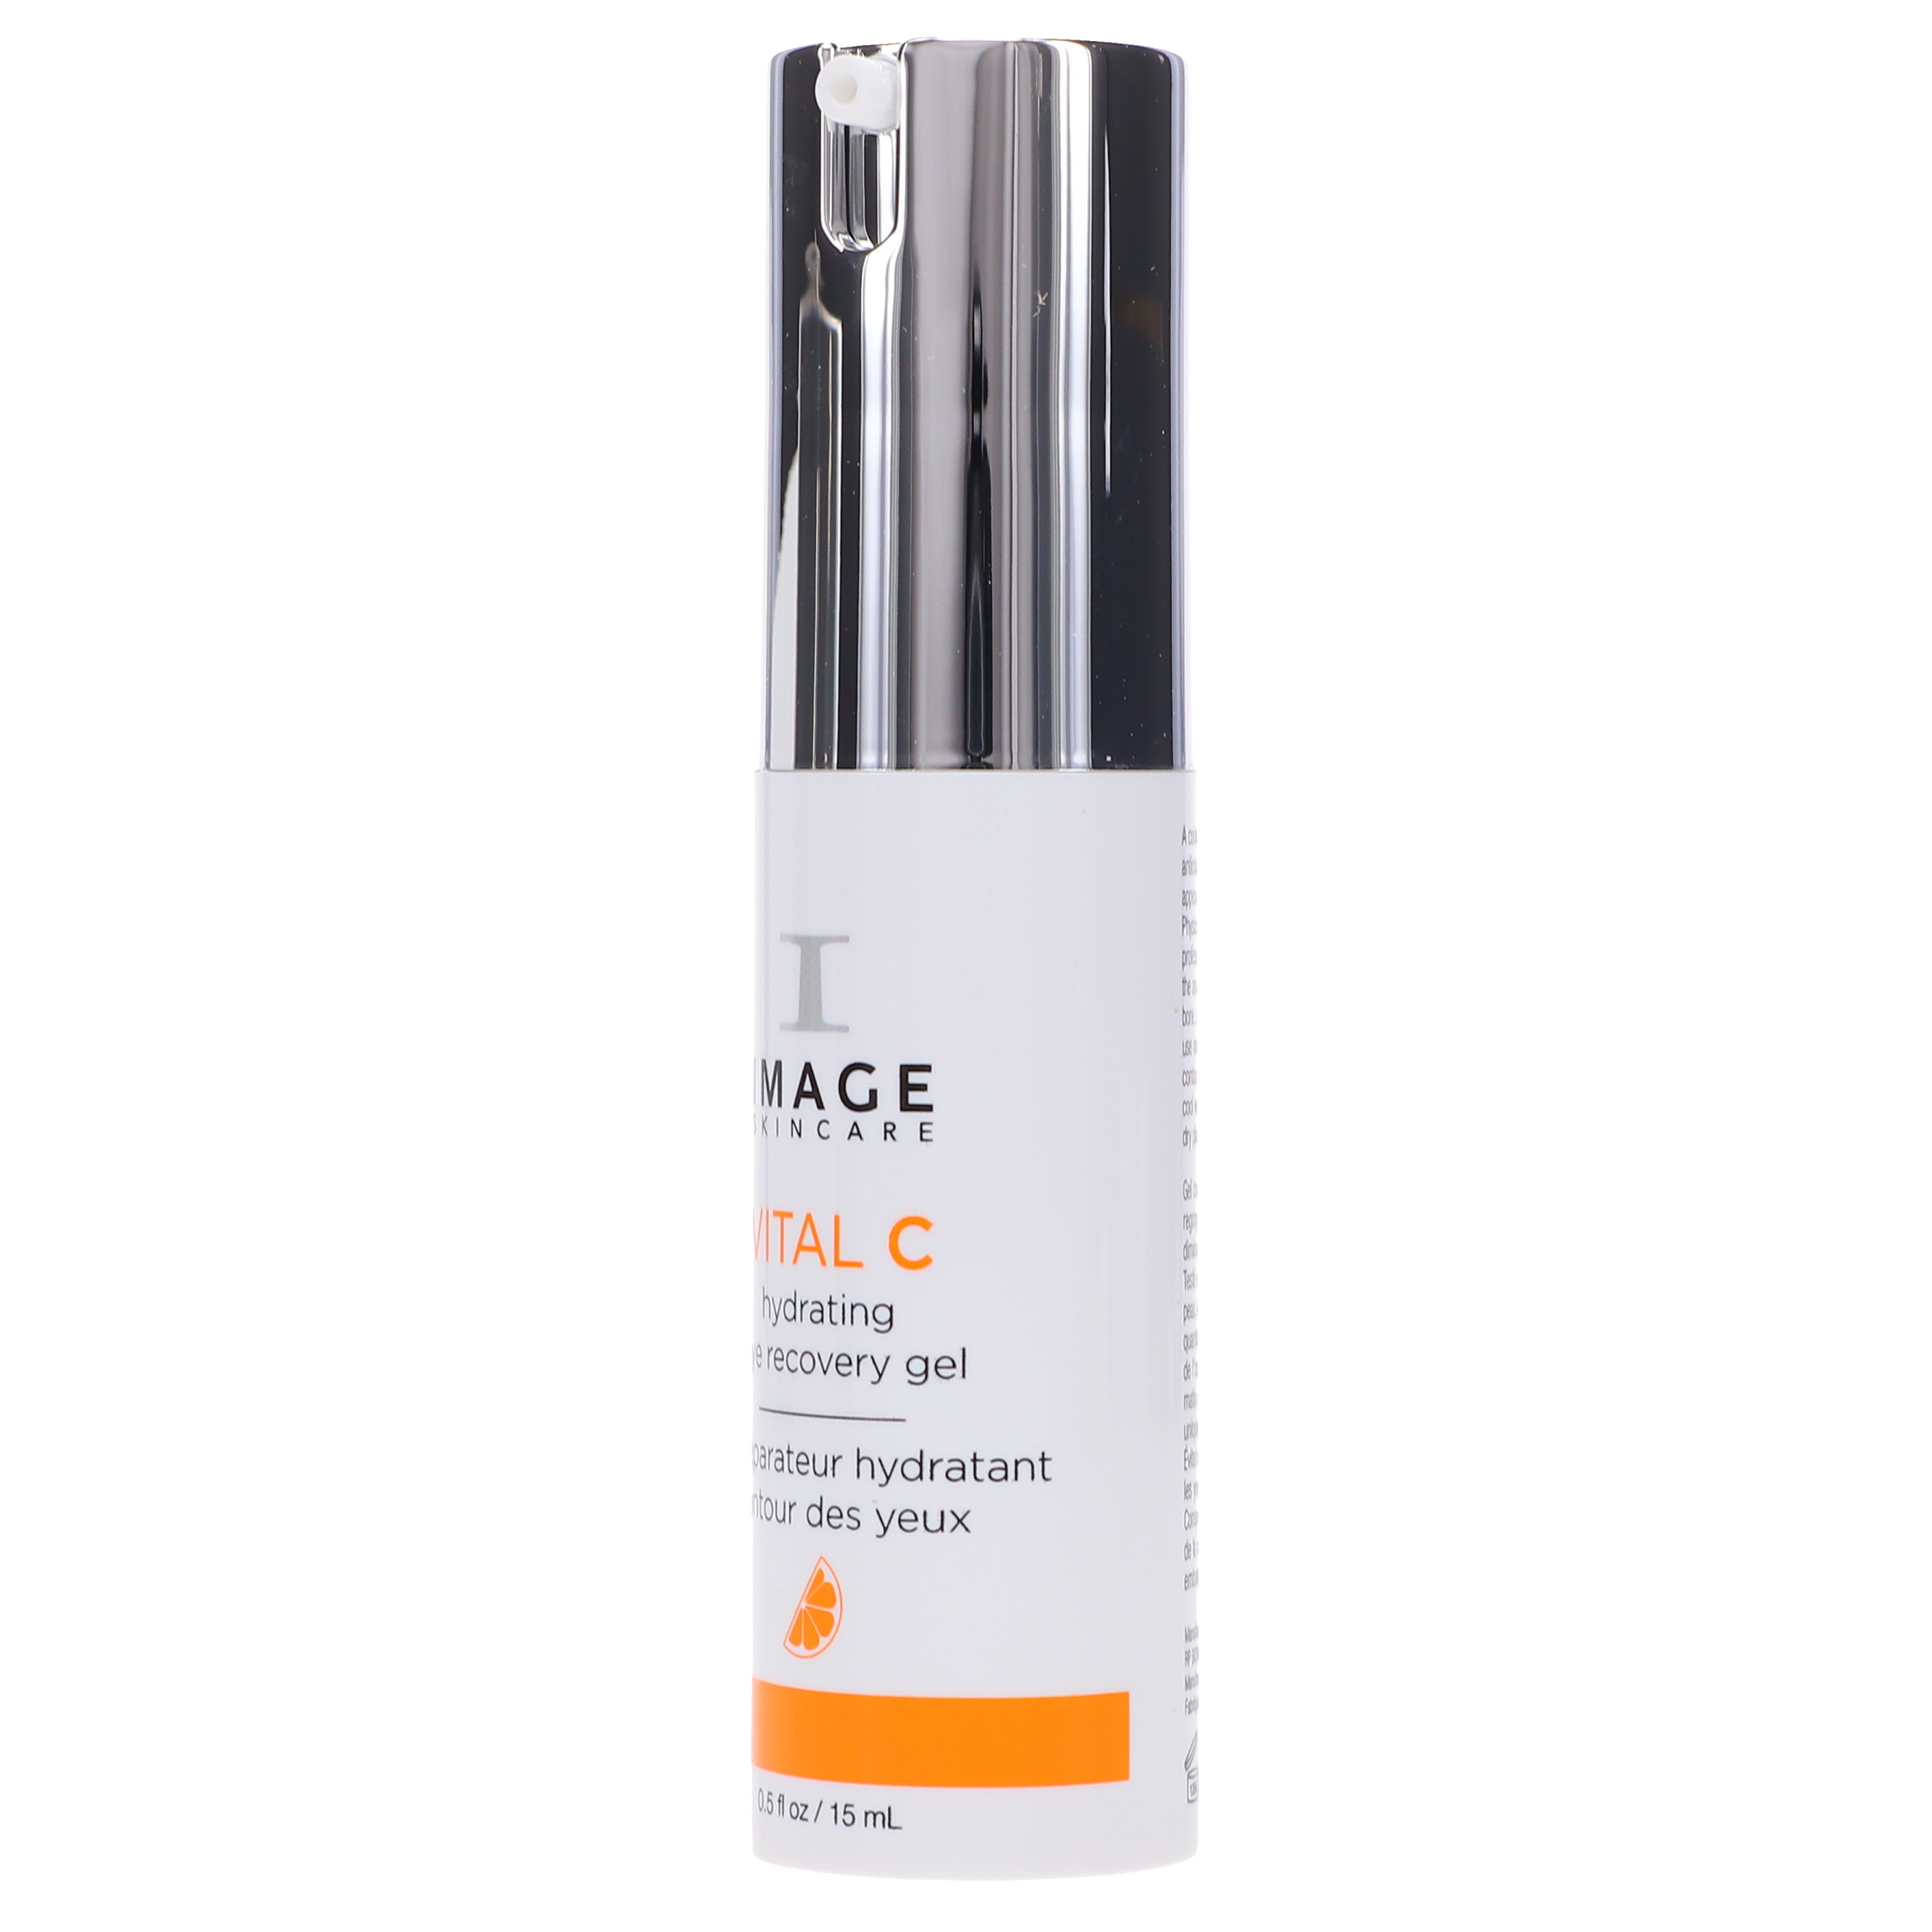 IMAGE Skincare Vital C Hydrating Eye Recovery Gel 0.5 oz - image 3 of 9